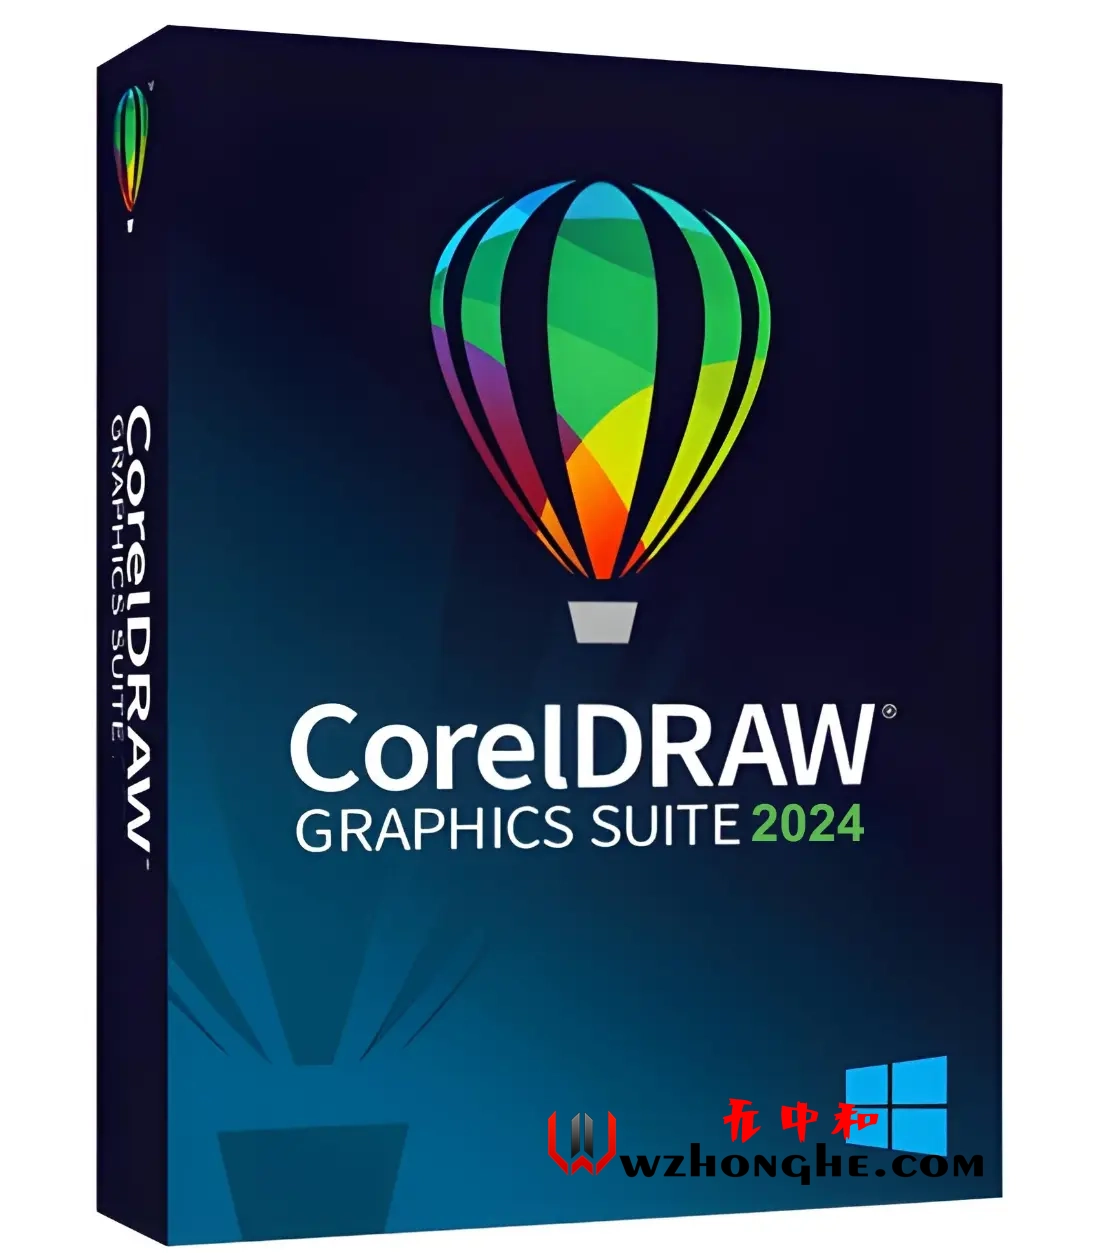 CorelDRAW Graphics Suite 2024 - 无中和wzhonghe.com -1